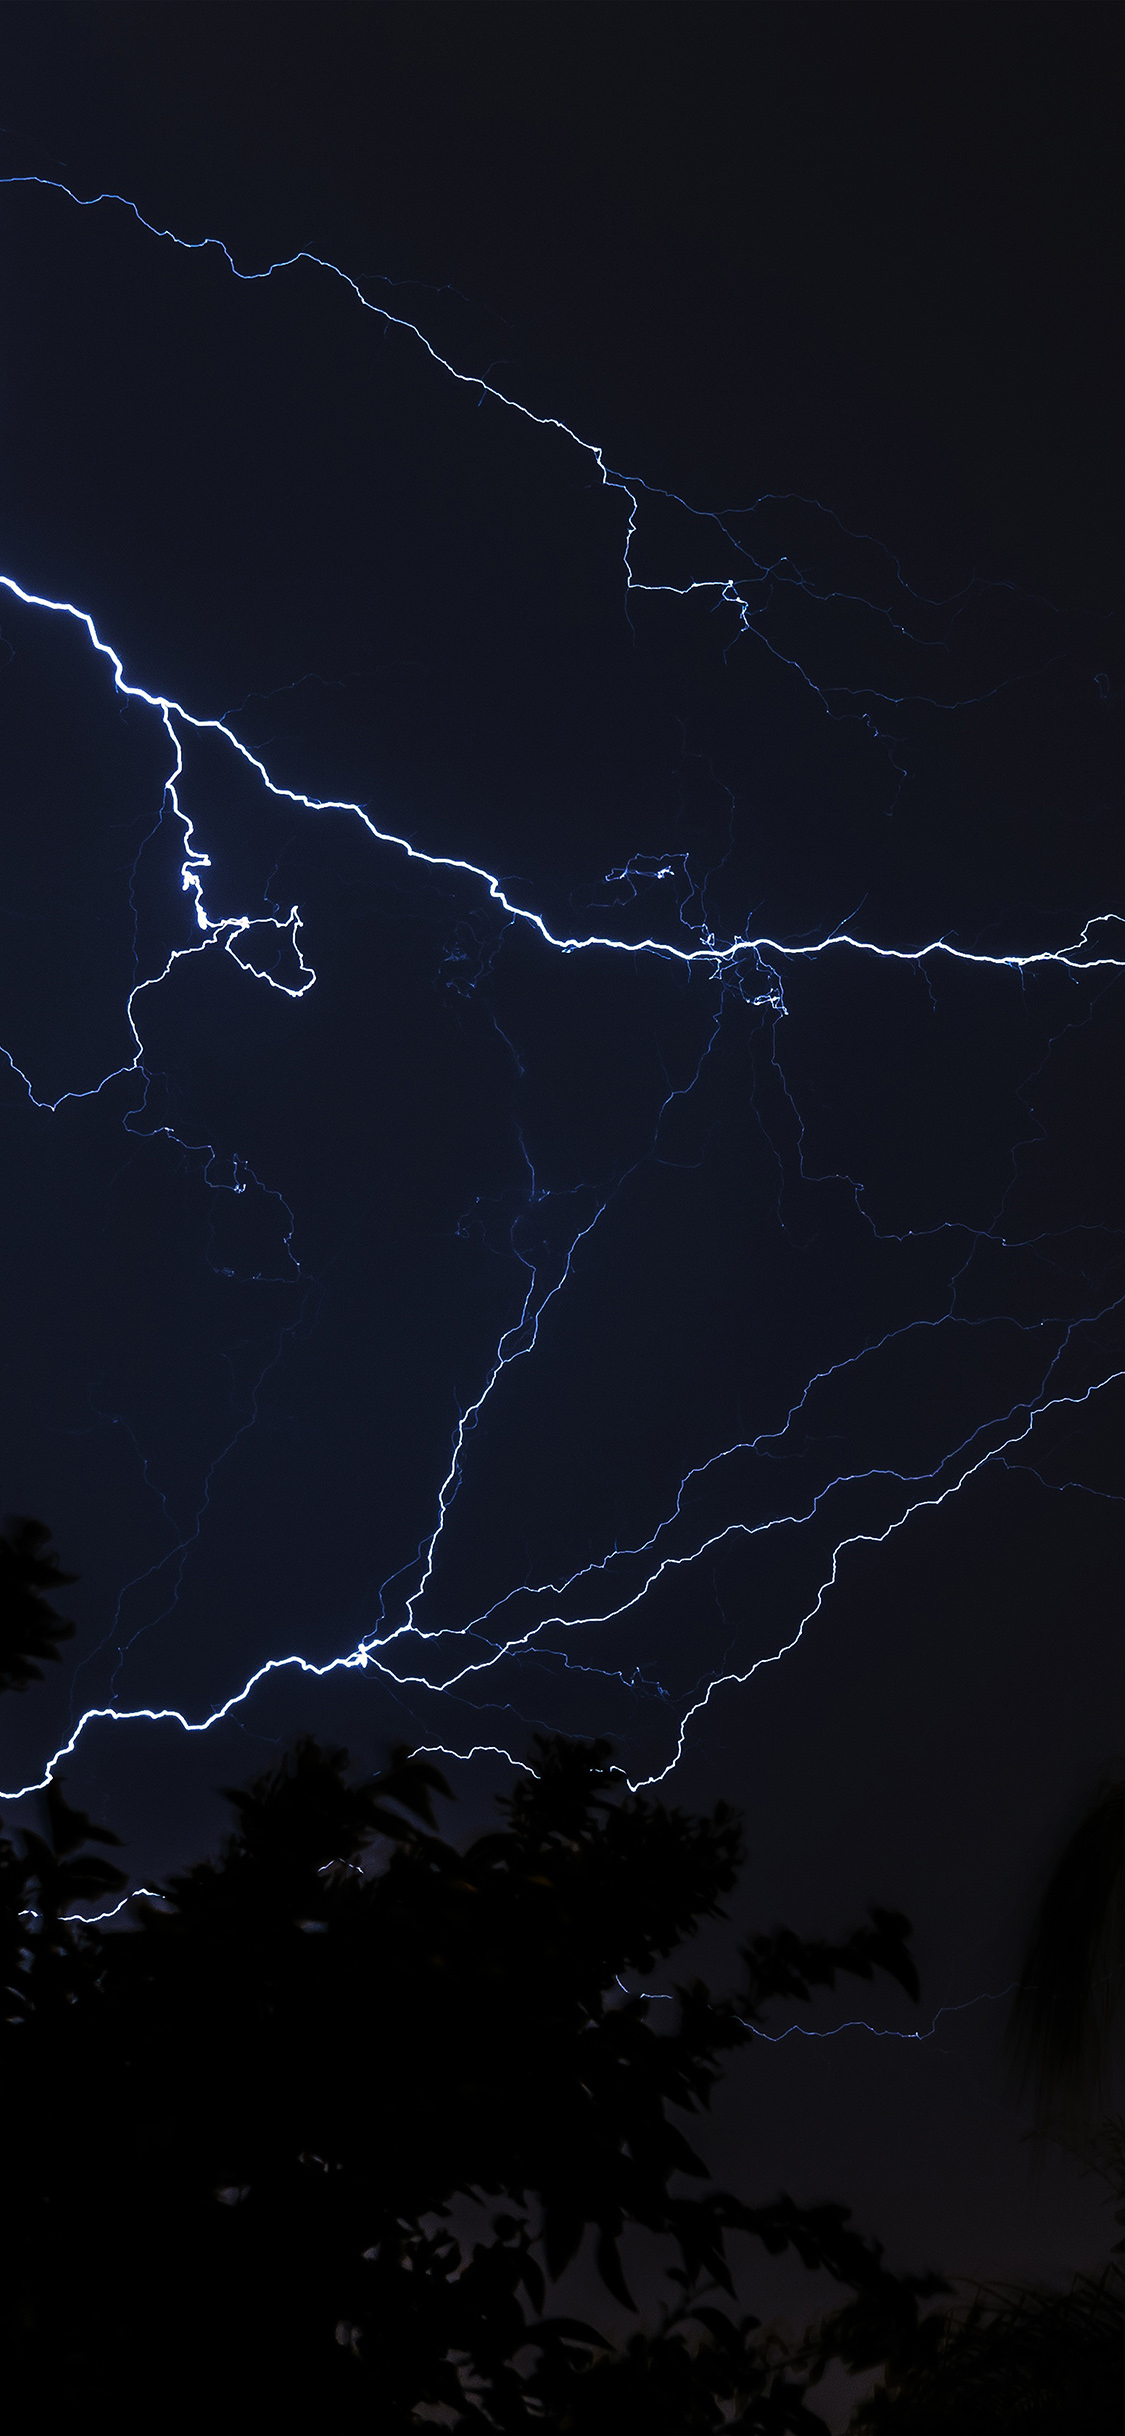 1125x2436 | iPhone X wallpaper | nj84-thunder-bolt-sky-night-dark- lightning